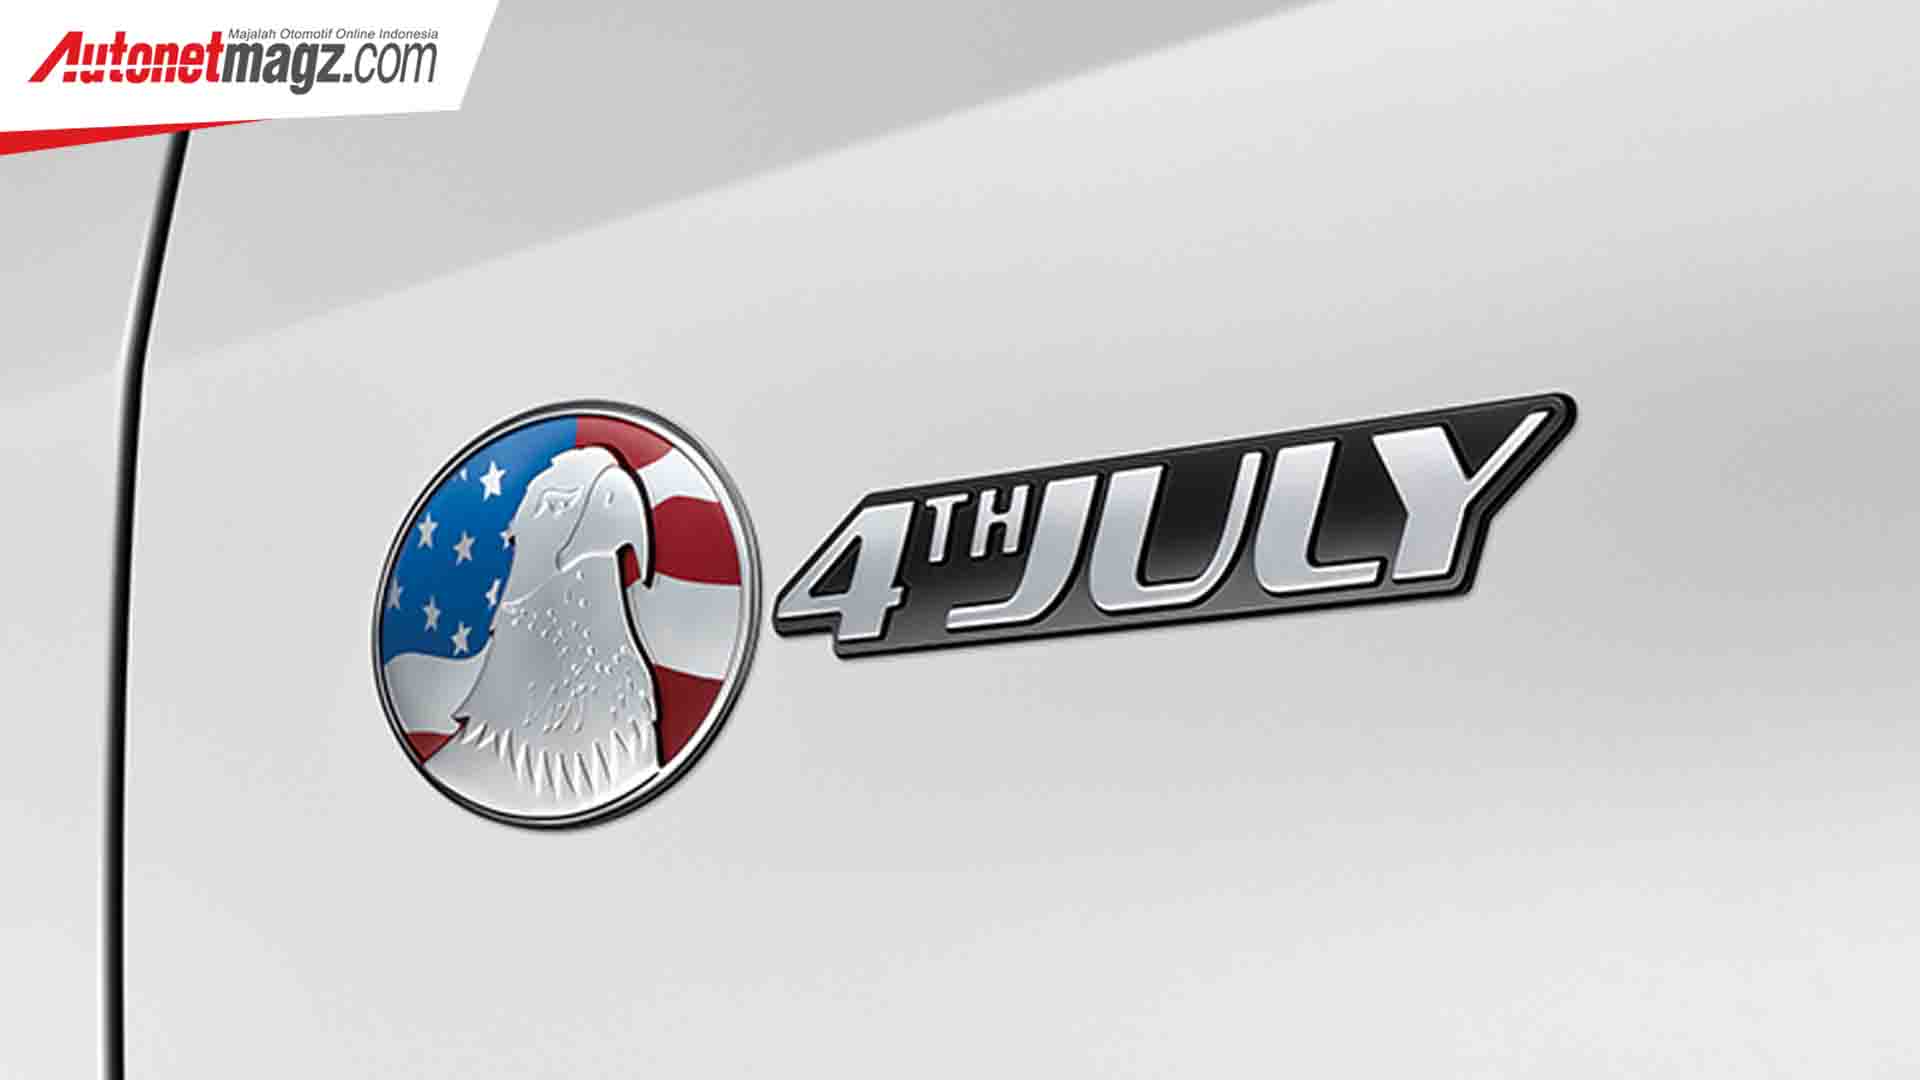 Berita, Harga Chevrolet Colorado 4th of July Edition: Chevrolet Colorado 4th of July Edition, Cuma 50 Unit Saja!